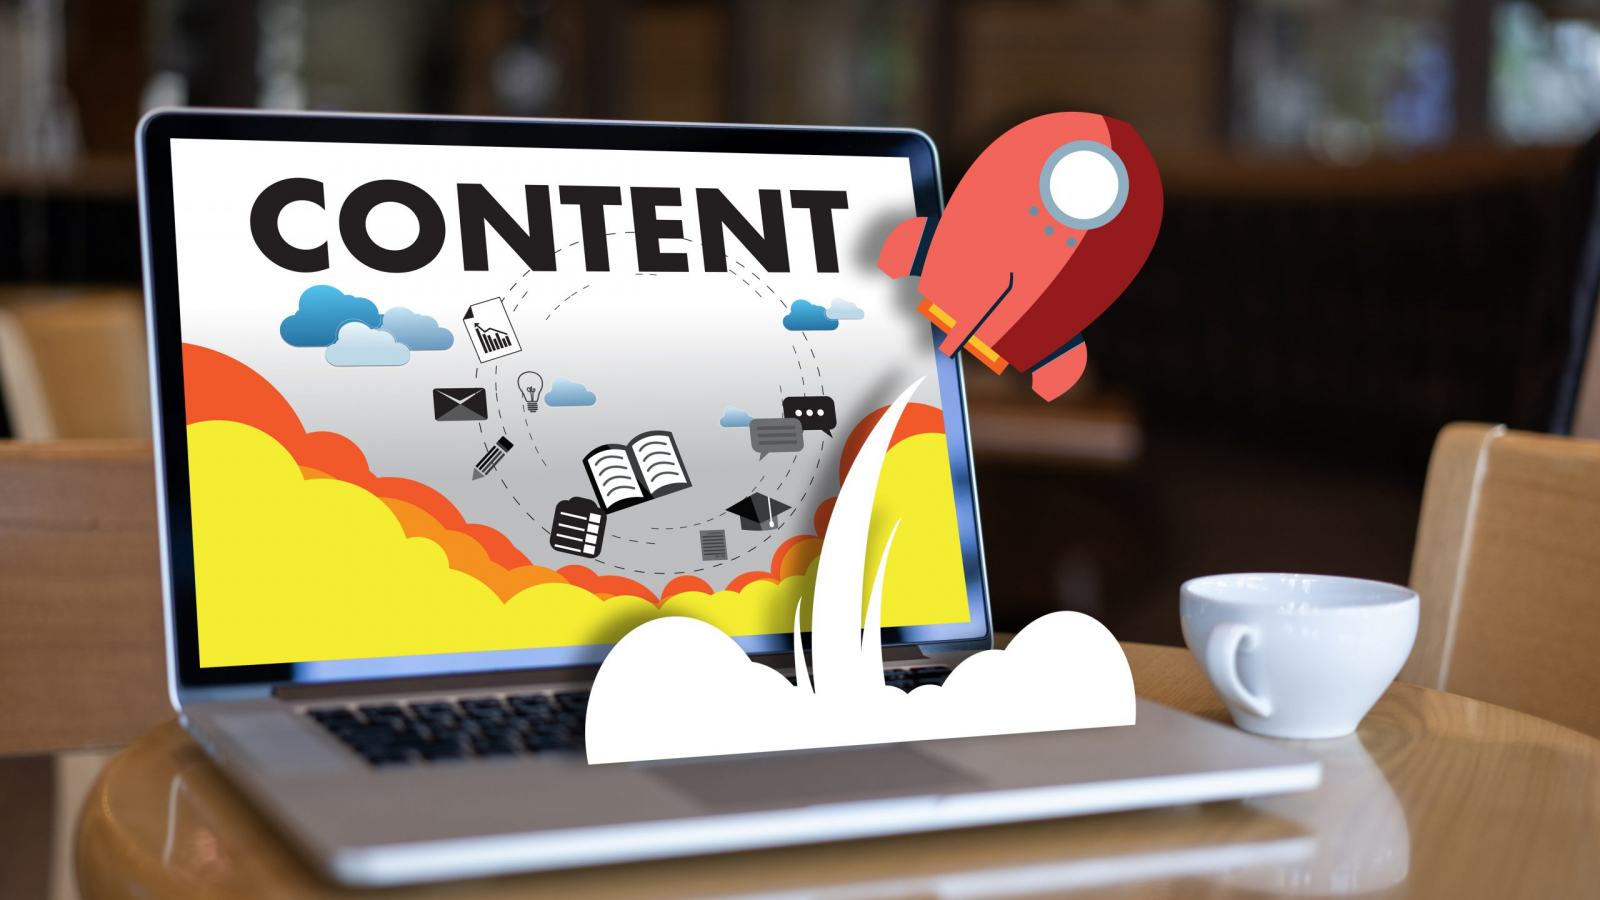 Content,Marketing,Content,Data,Blogging,Media,Publication,Information,Vision,Concept